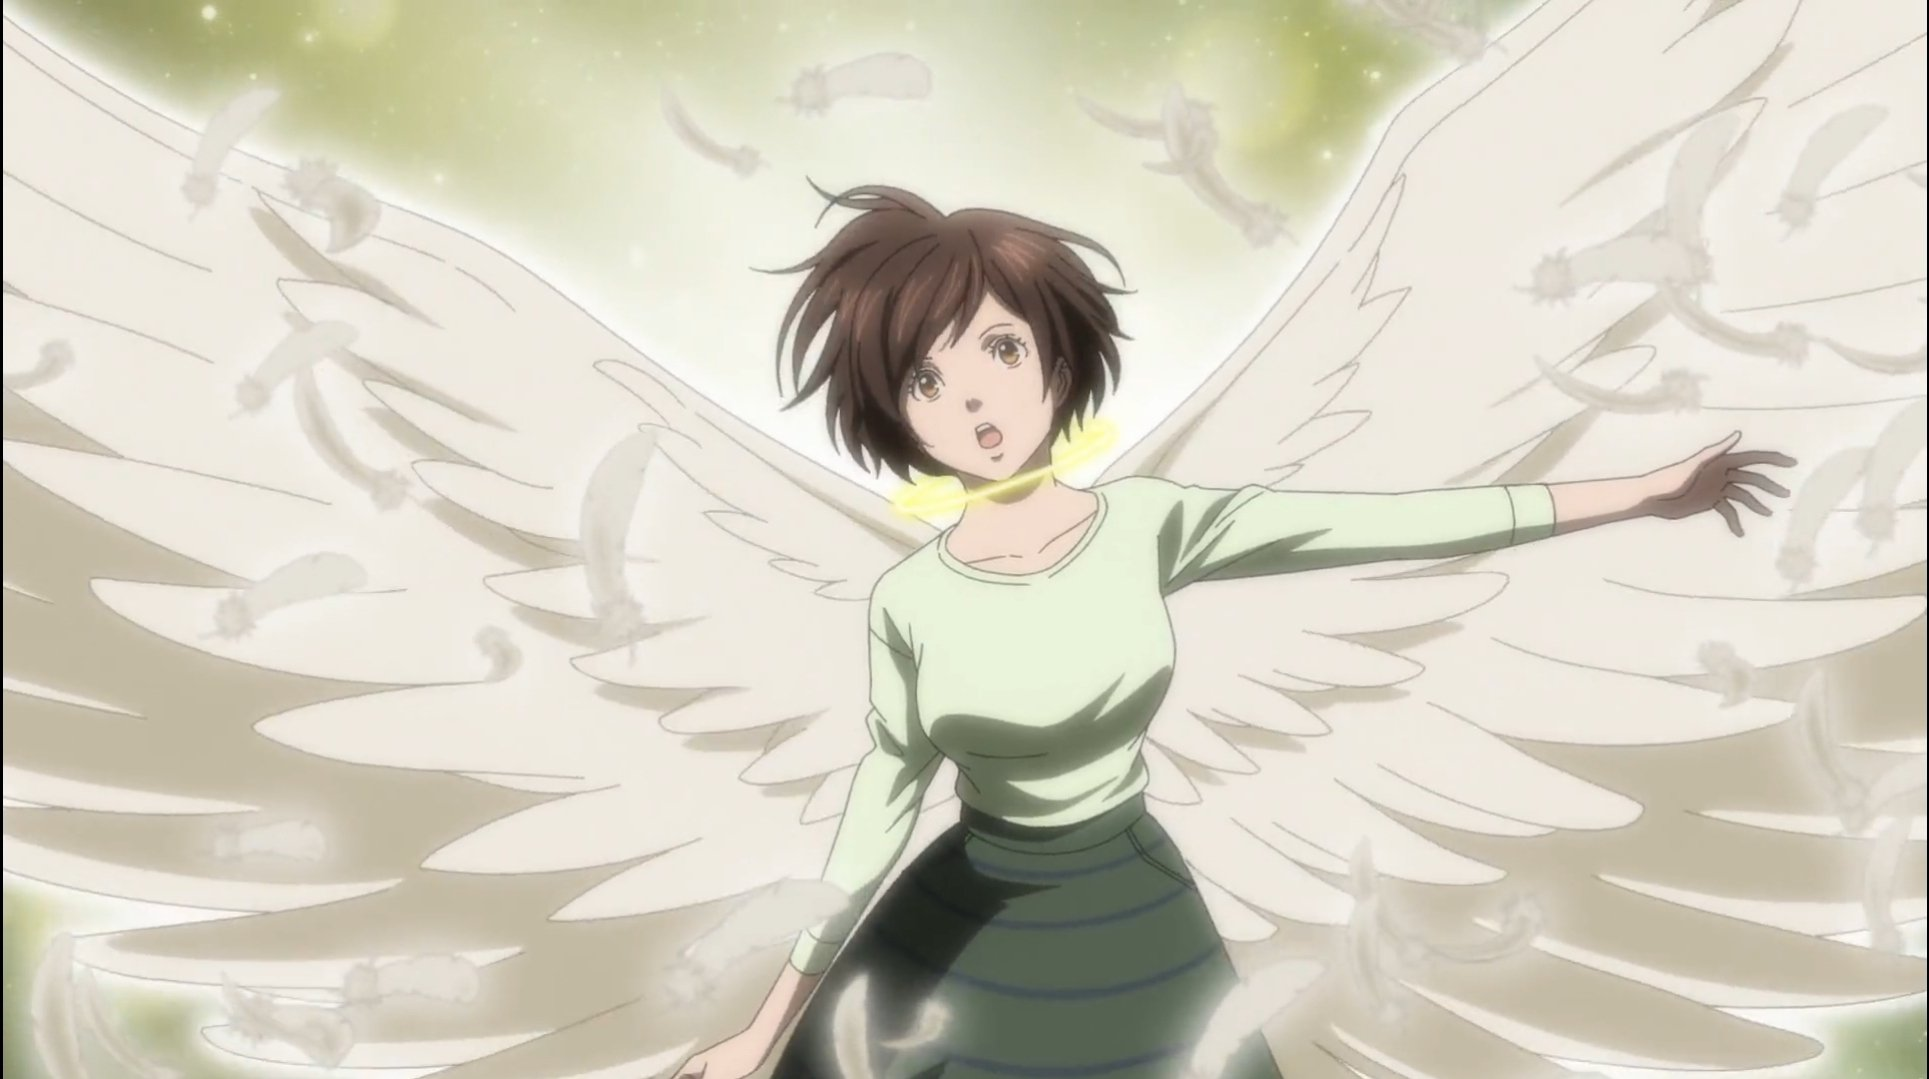 Post a character with wings - anime các câu trả lời - fanpop